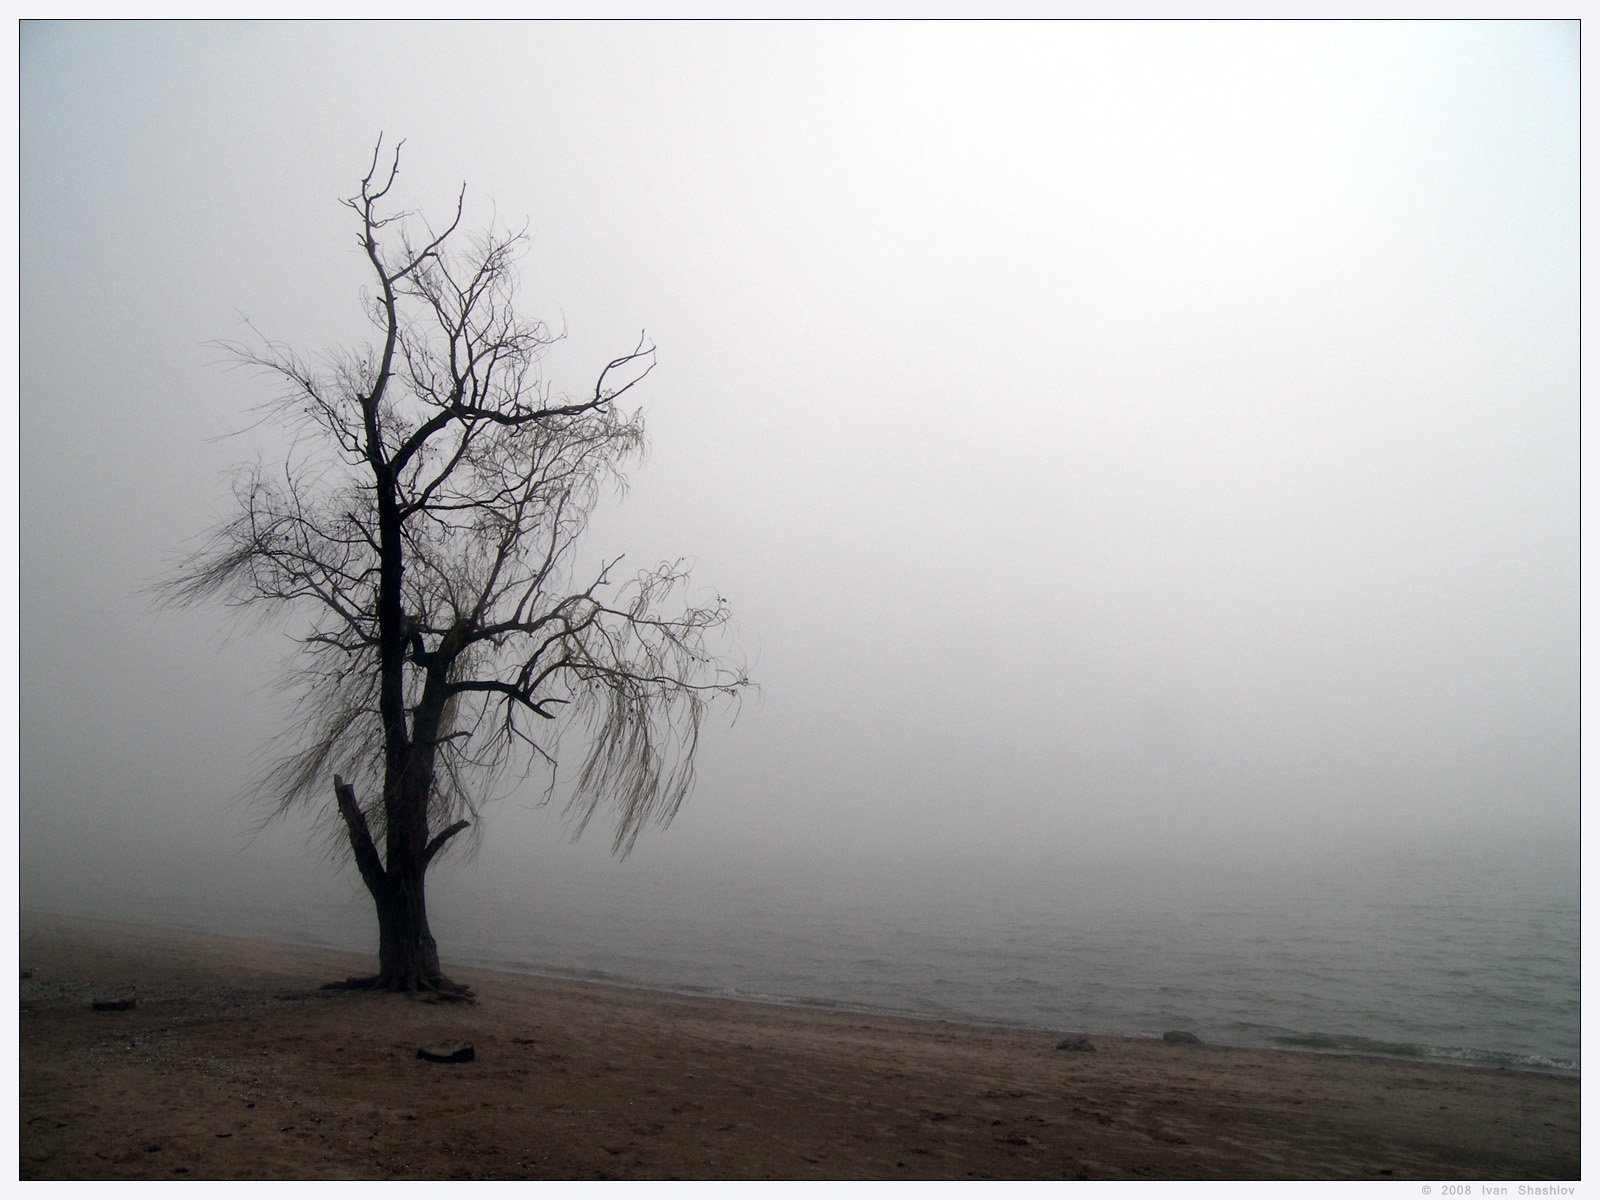 Скука 5 букв. Одинокое дерево. Деревья в тумане. Грустное дерево. Одинокая дерева в тумане.